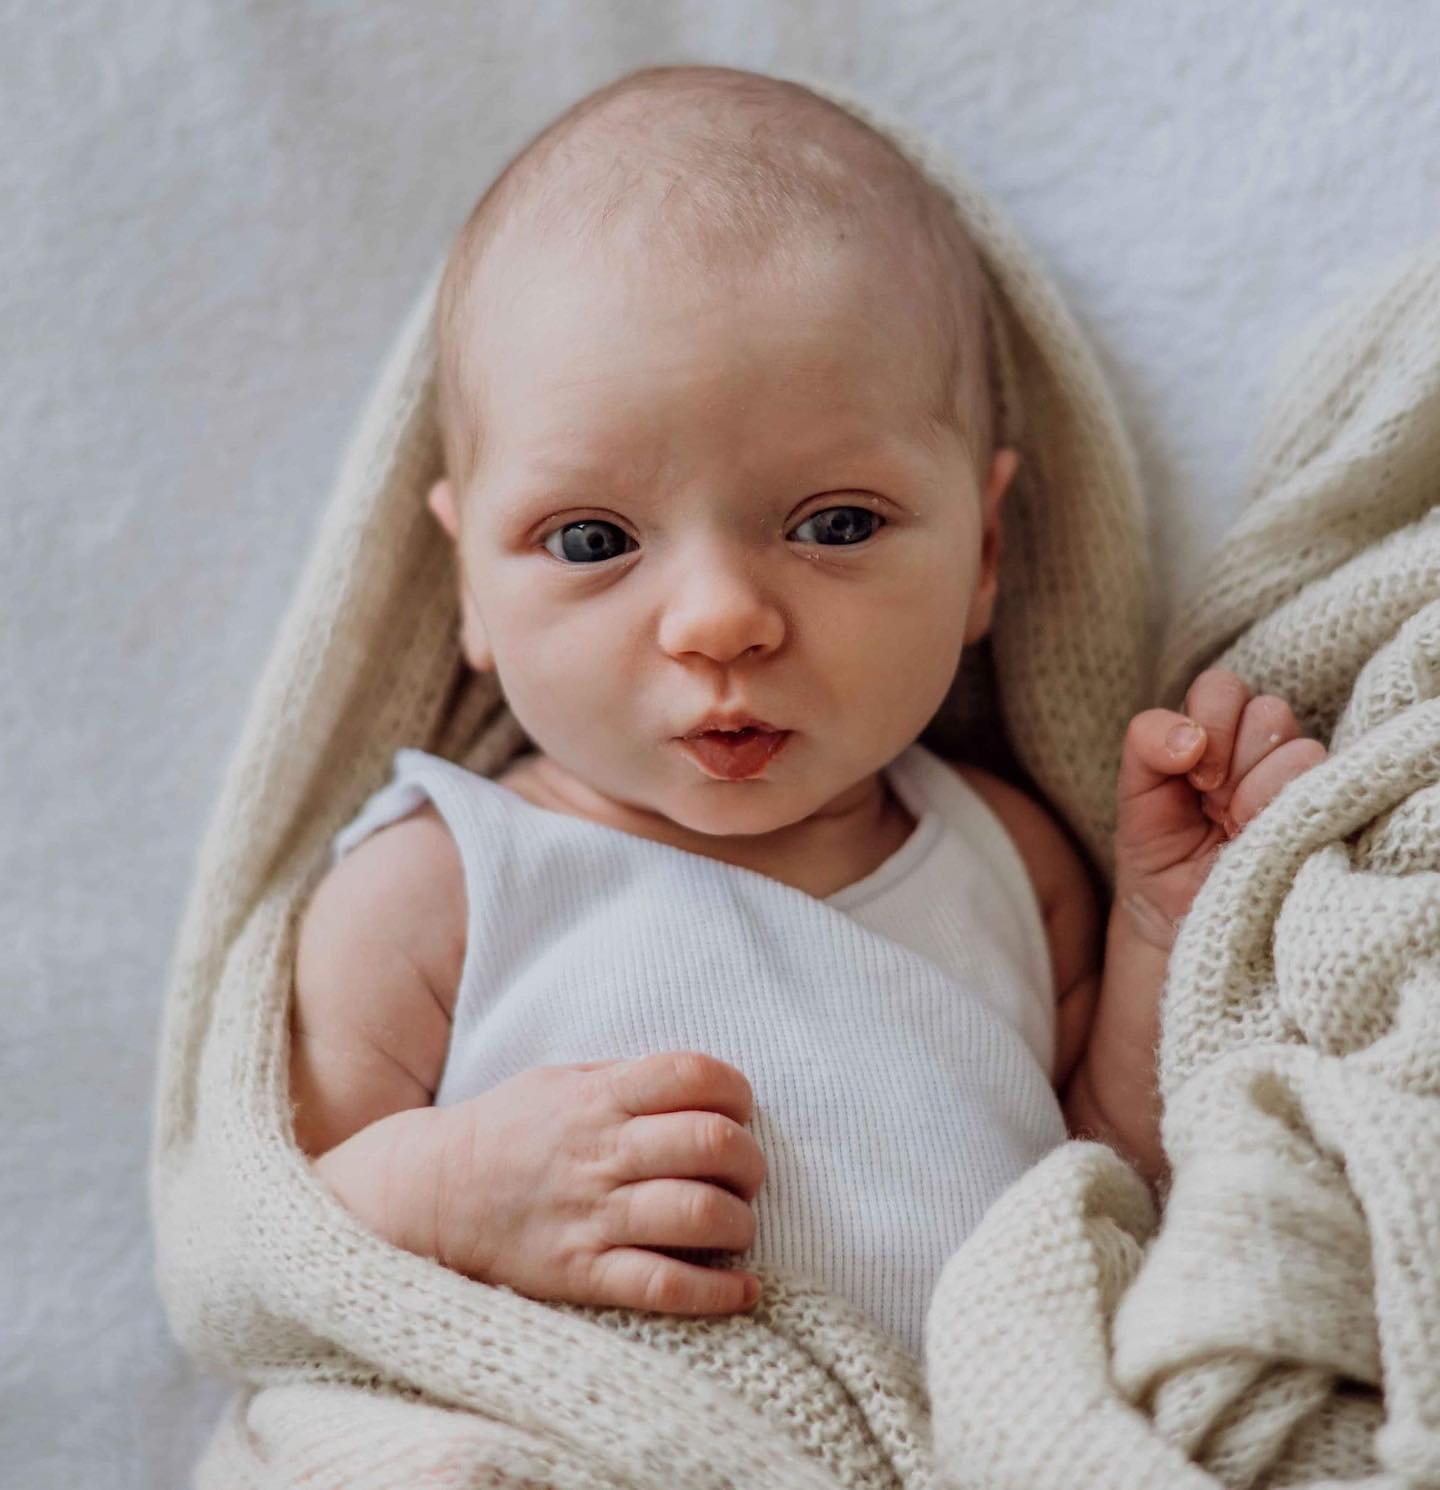 Baby Olivia ❤️❤️❤️. She had the most intense wisest eyes.  I fell into them 🥺❤️❤️ @tiziamayphotography #melbournenewbornphotographer #newbornphotographer @tiffkennon